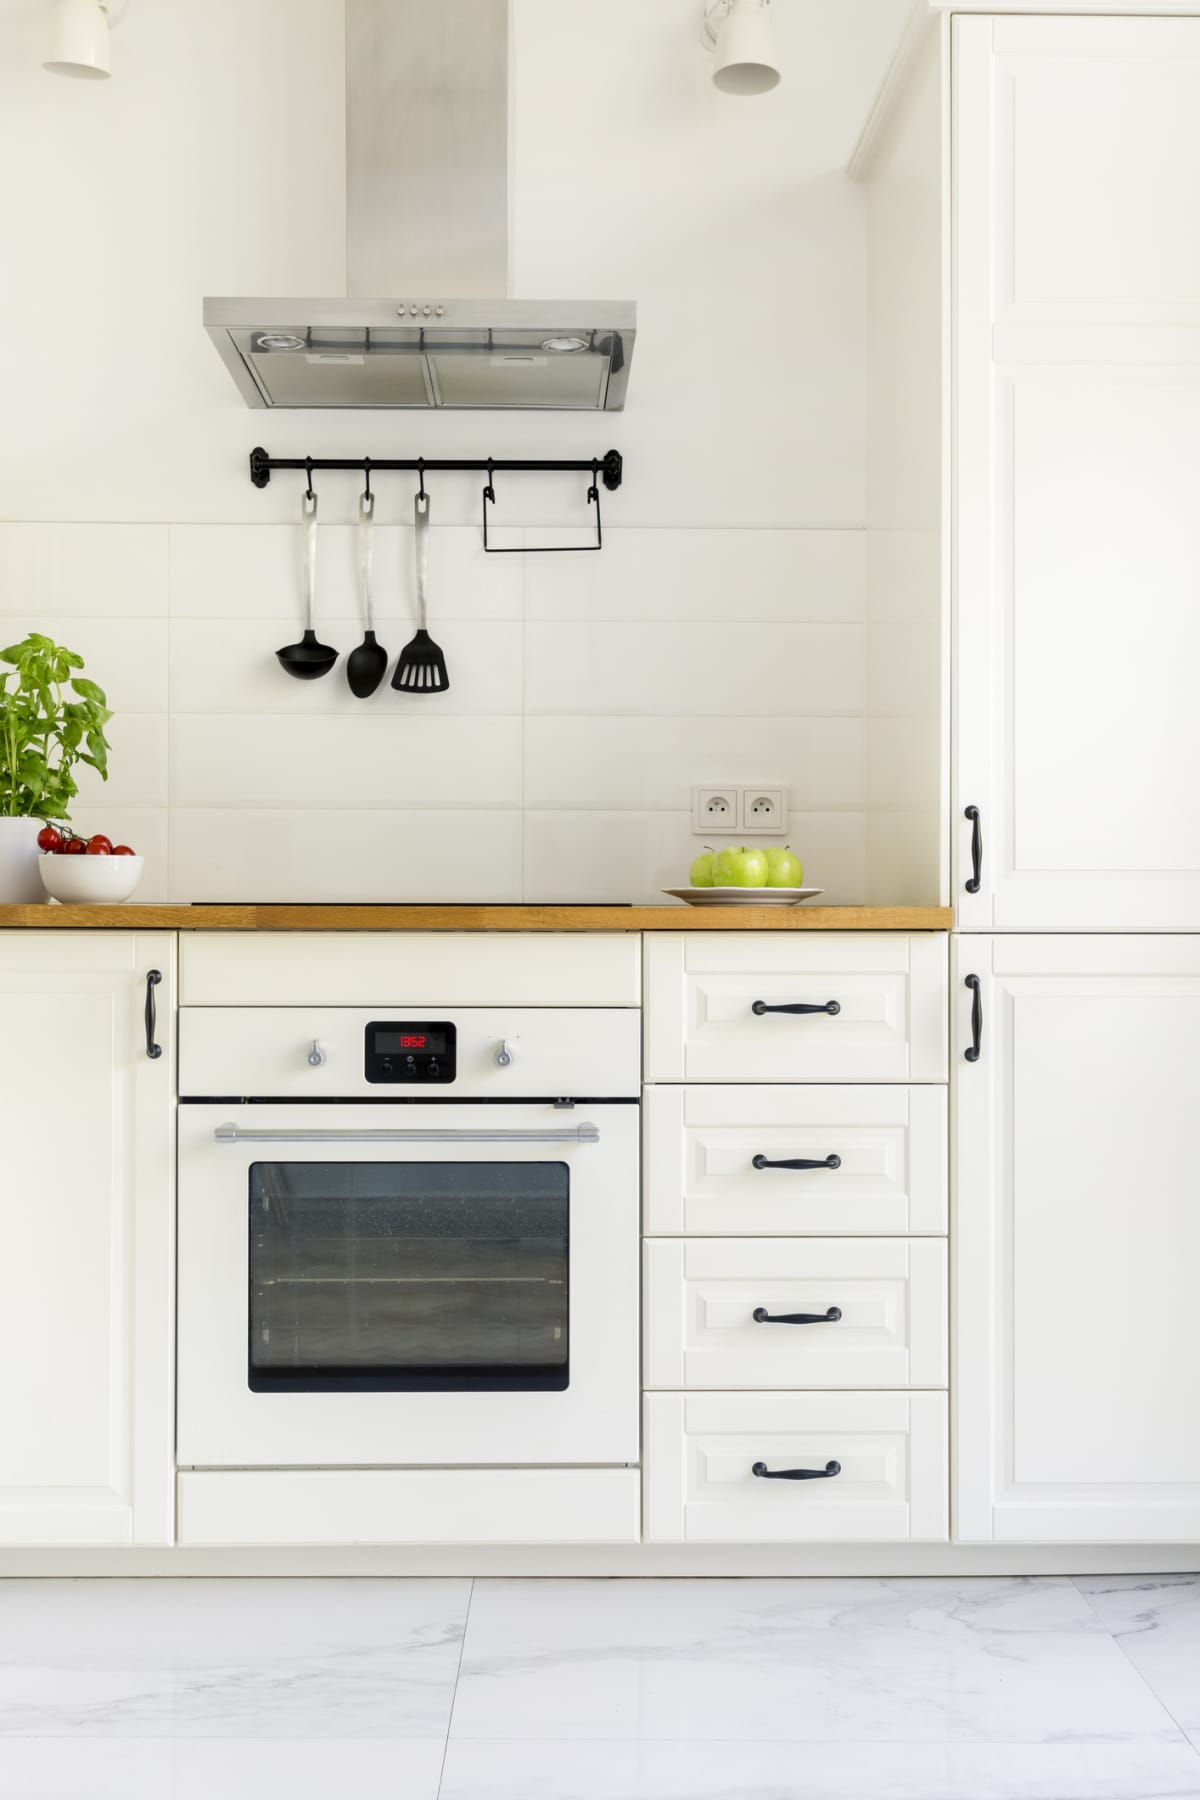 A white kitchen with appliances